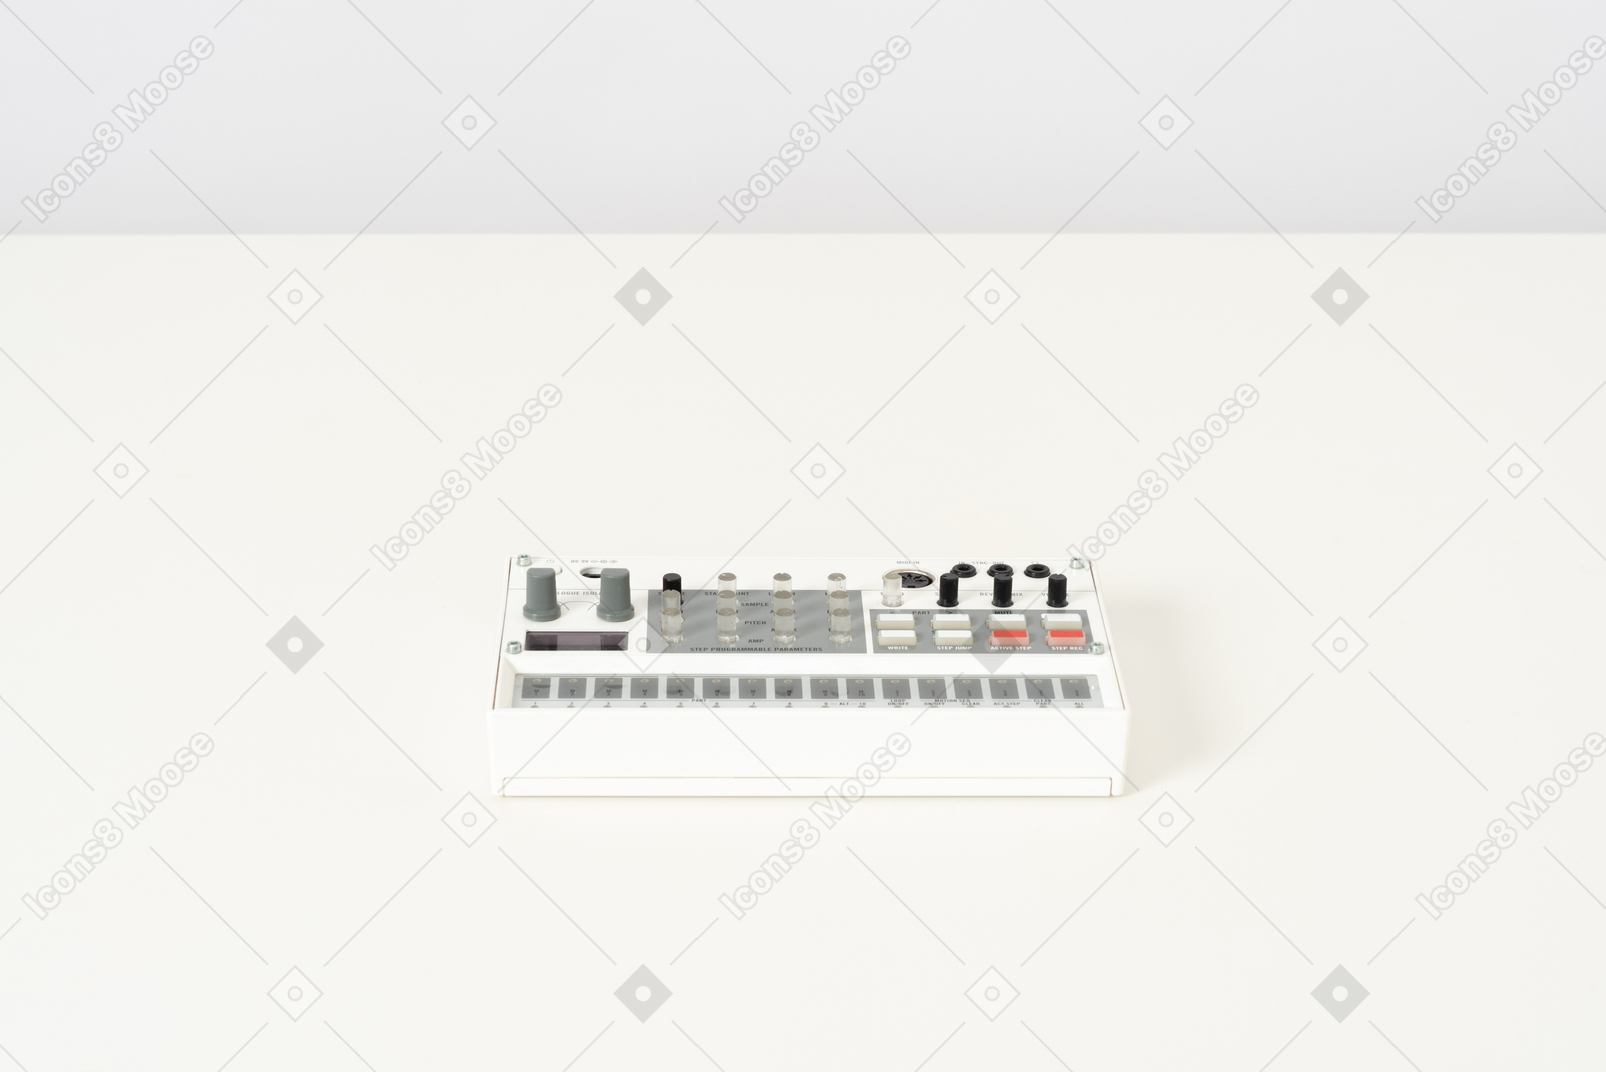 White fm synthesizer on a white background